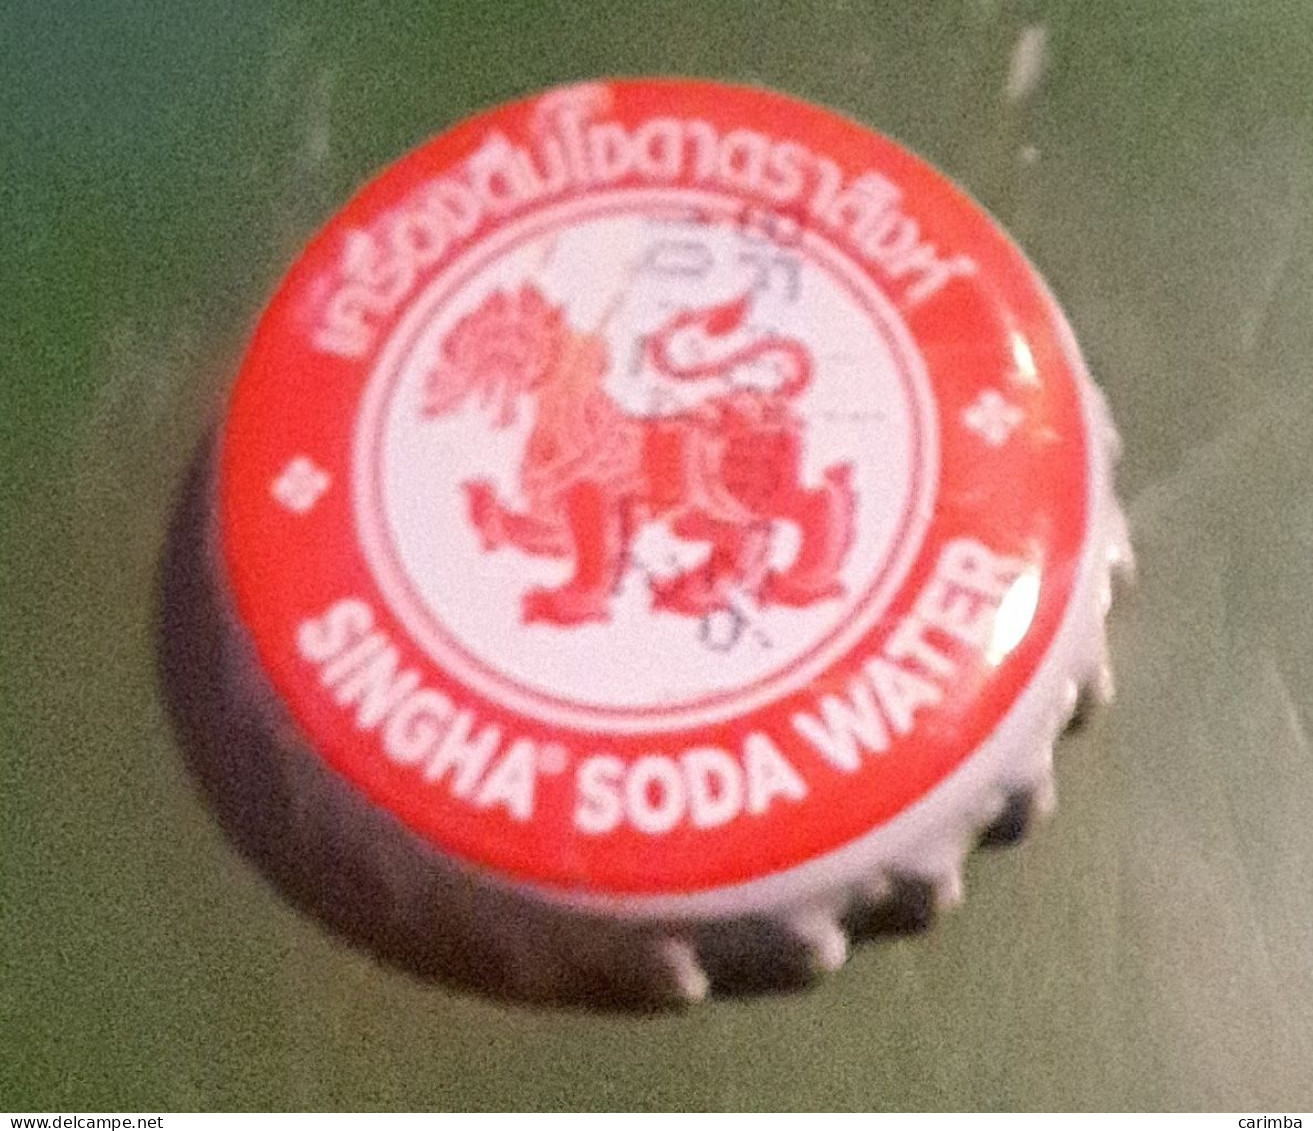 SINCHA SODA WATER - Soda